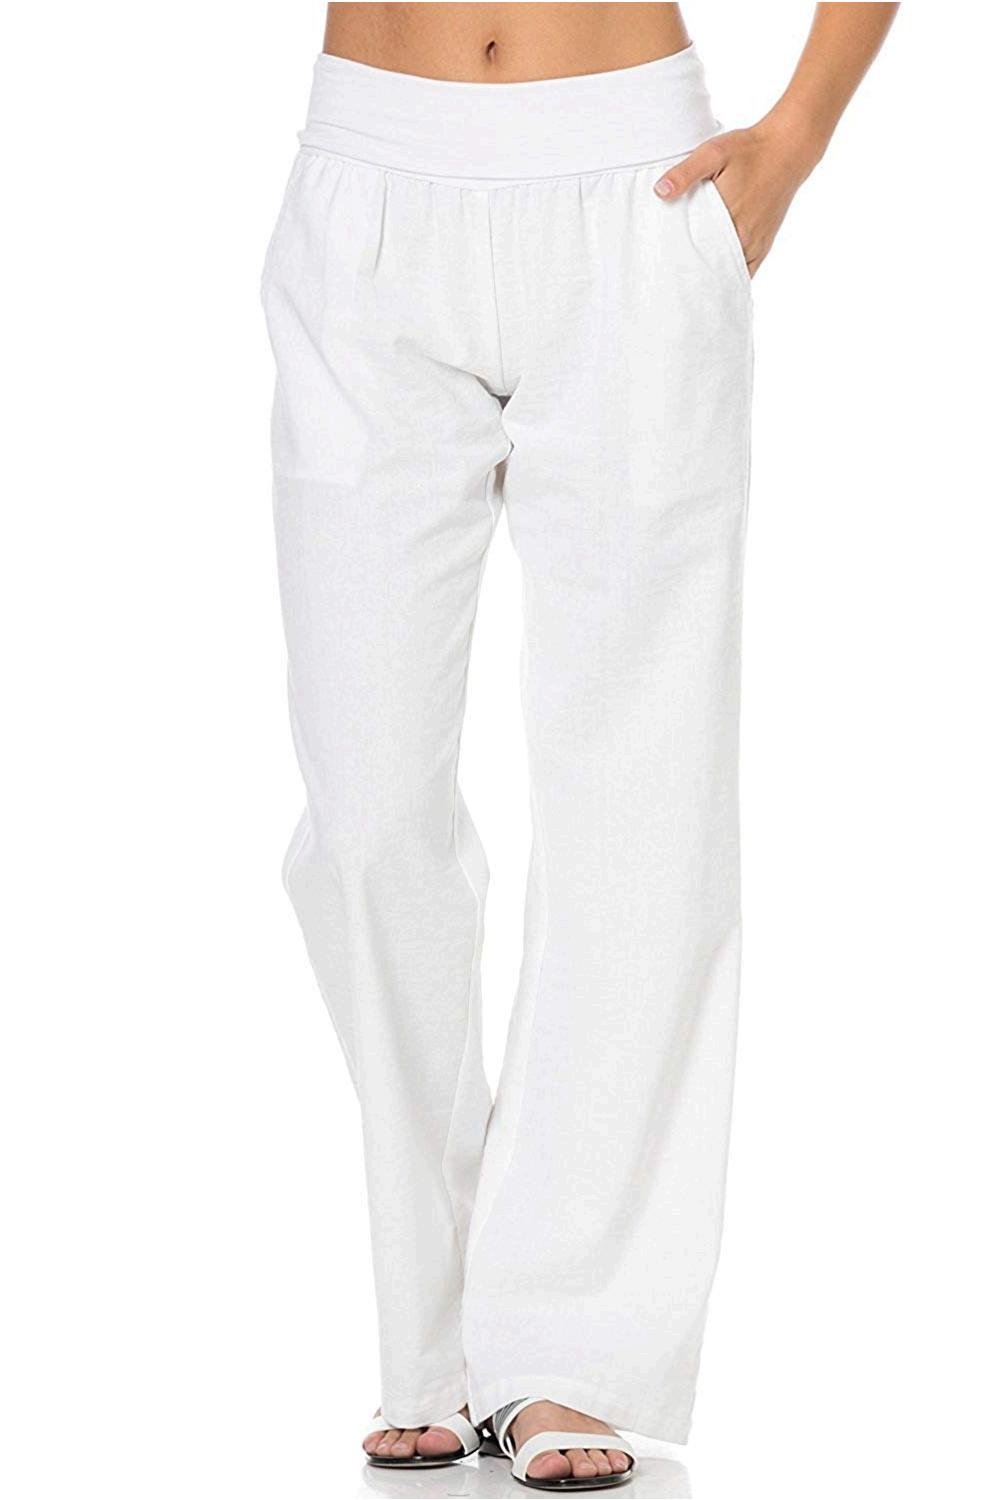 Poplooks Women's Comfy Fold Over Linen Pants (Large, White), White ...